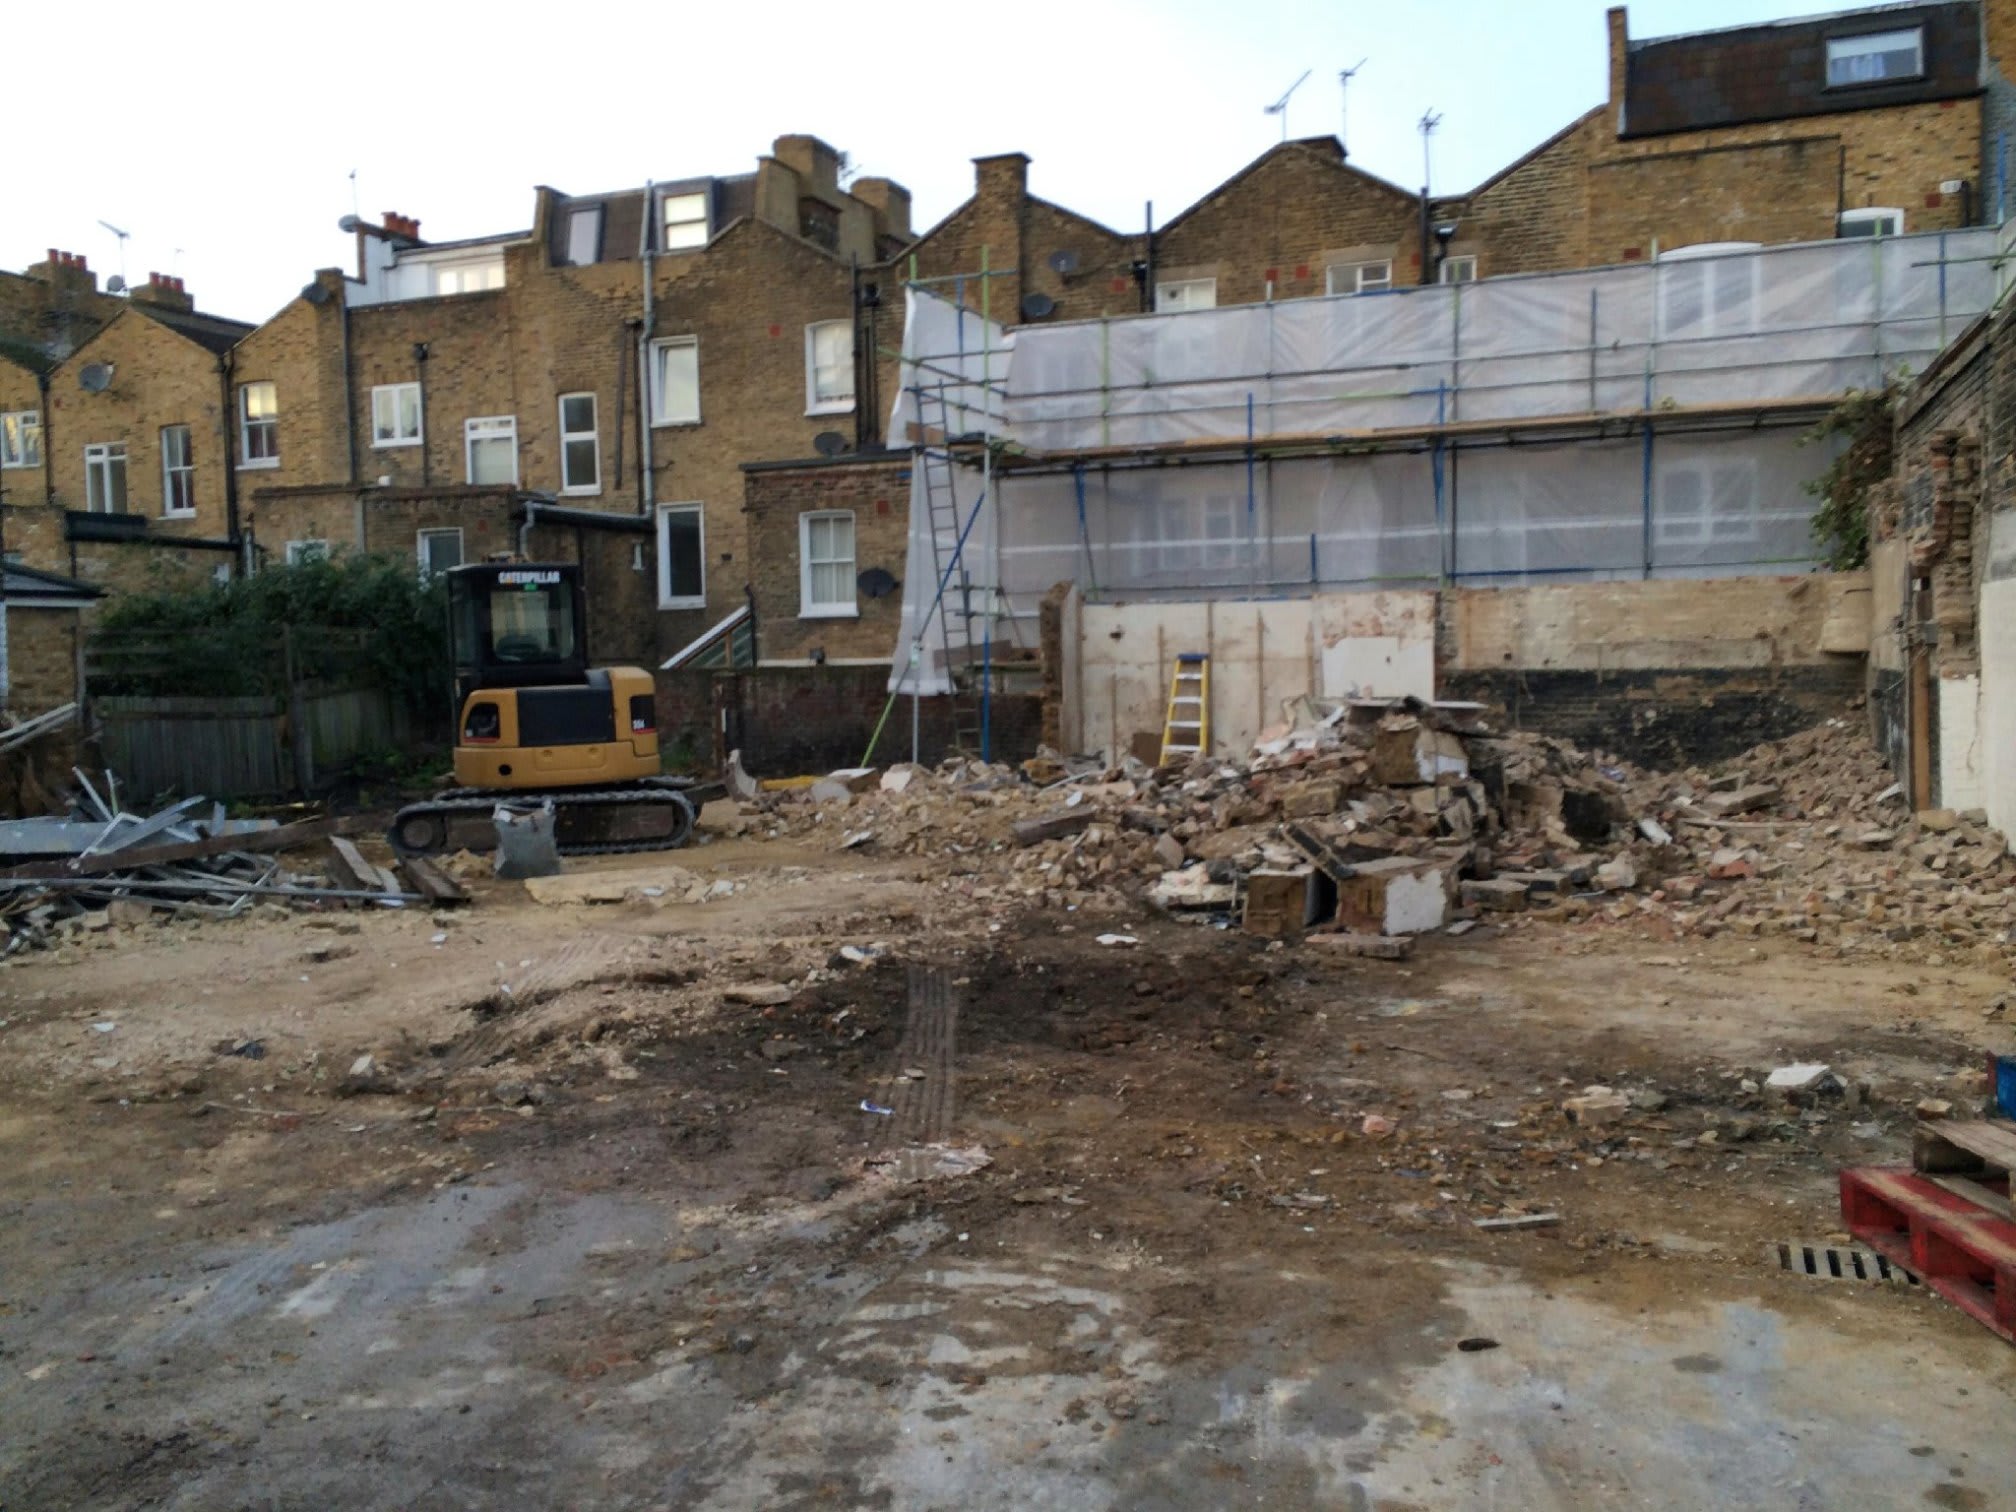 Images Runfold Demolition & Salvage